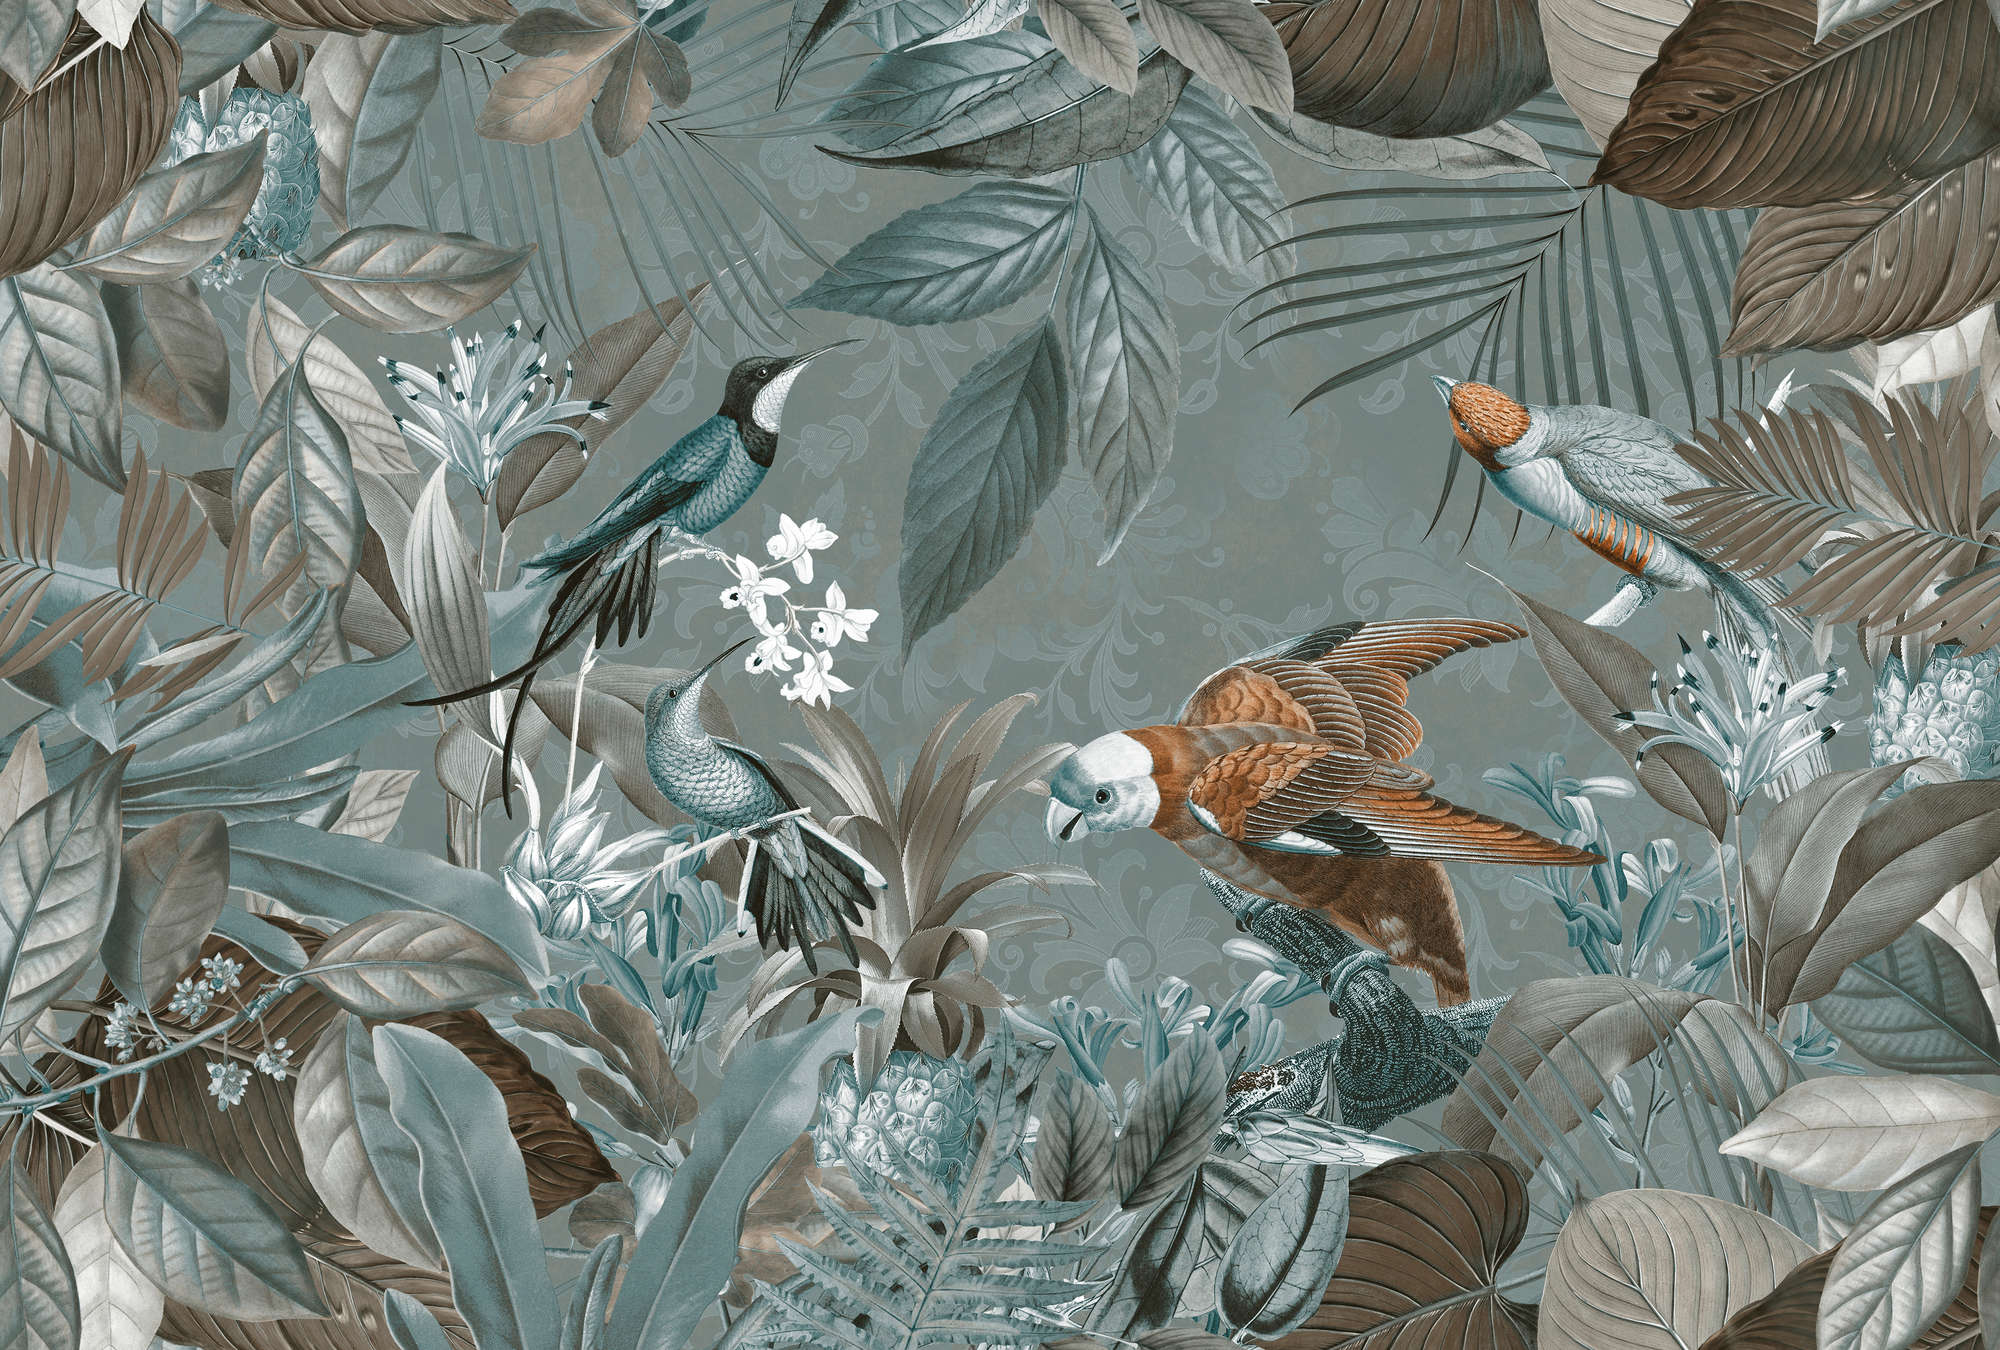             Dschungel Fototapete Vögeln & tropisches Design
        